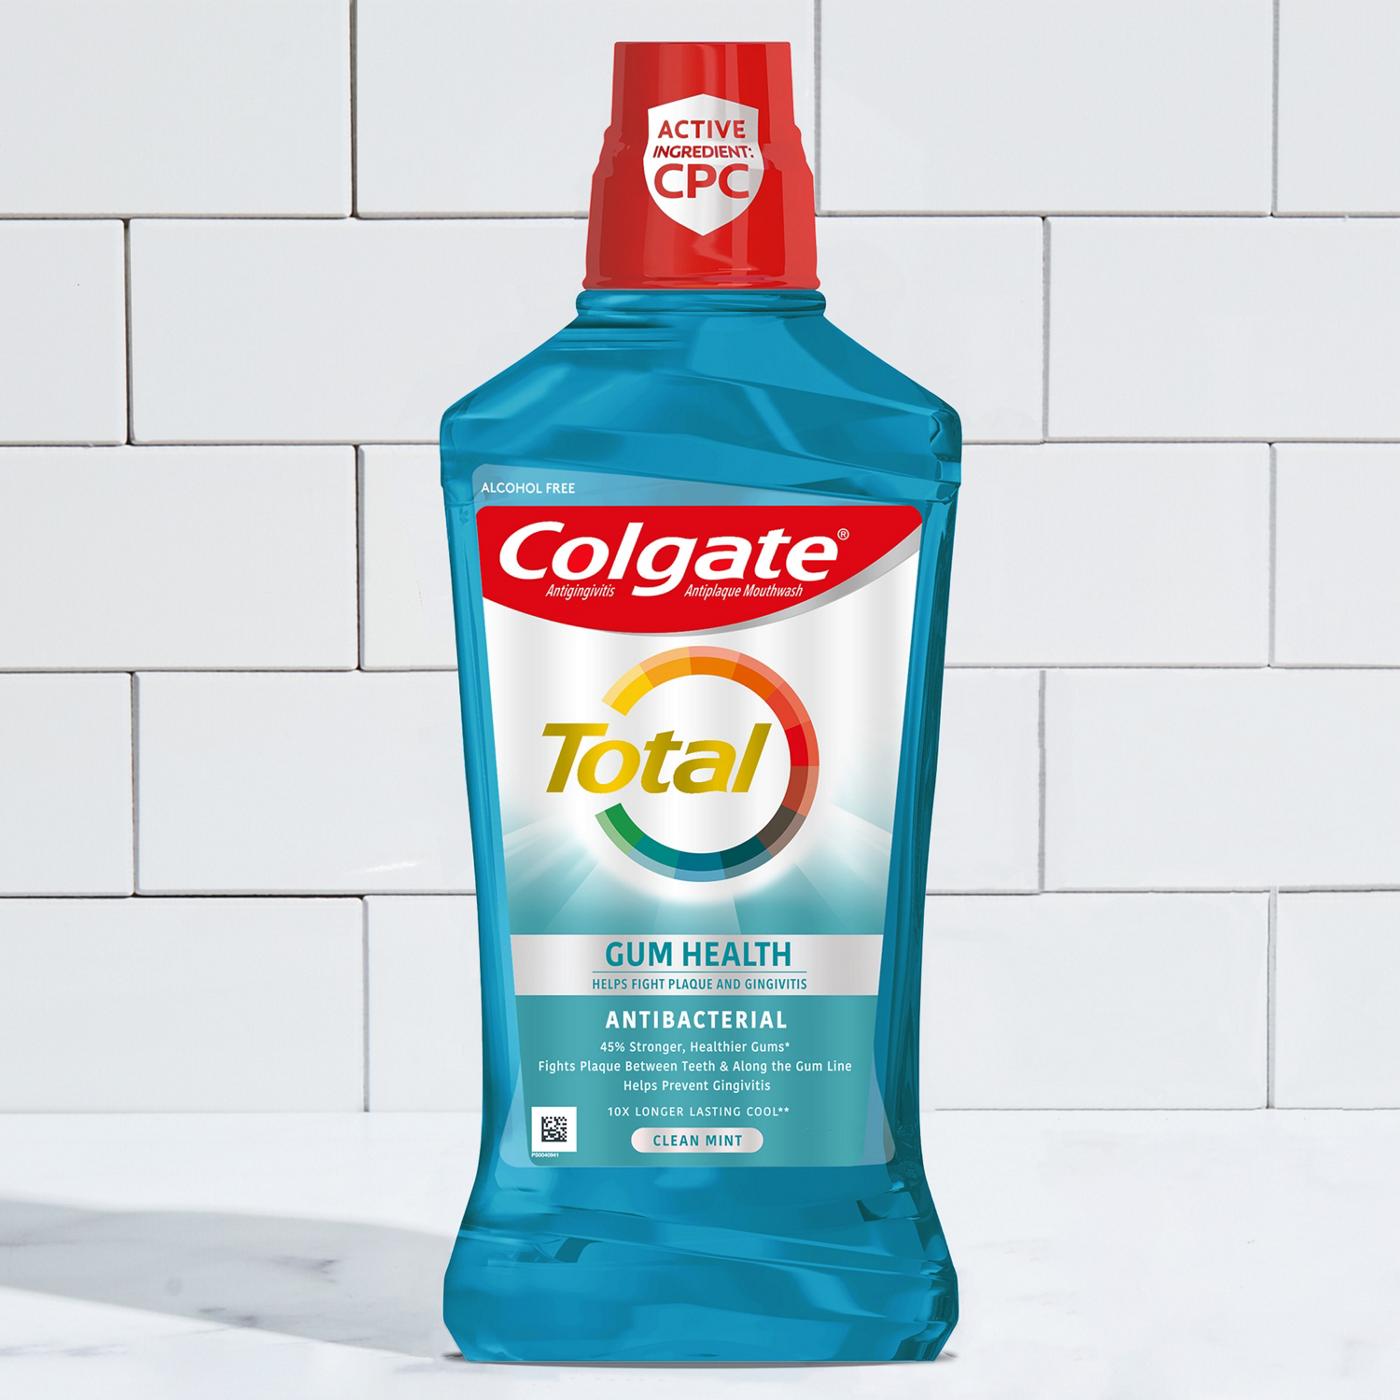 Colgate Total Gum Health Mouthwash - Clean Mint; image 6 of 7